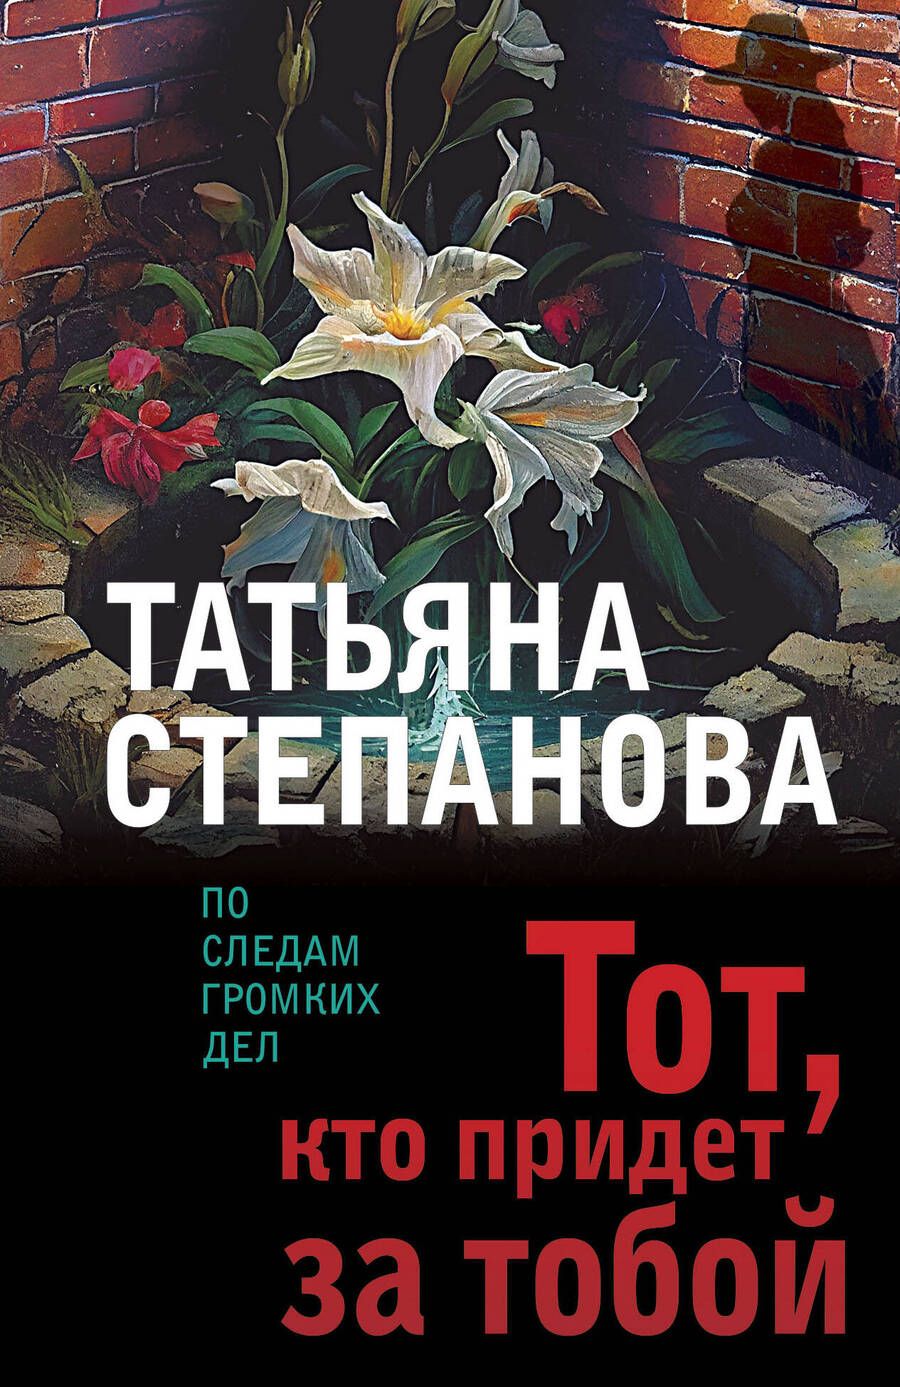 Обложка книги "Степанова: Тот, кто придет за тобой"